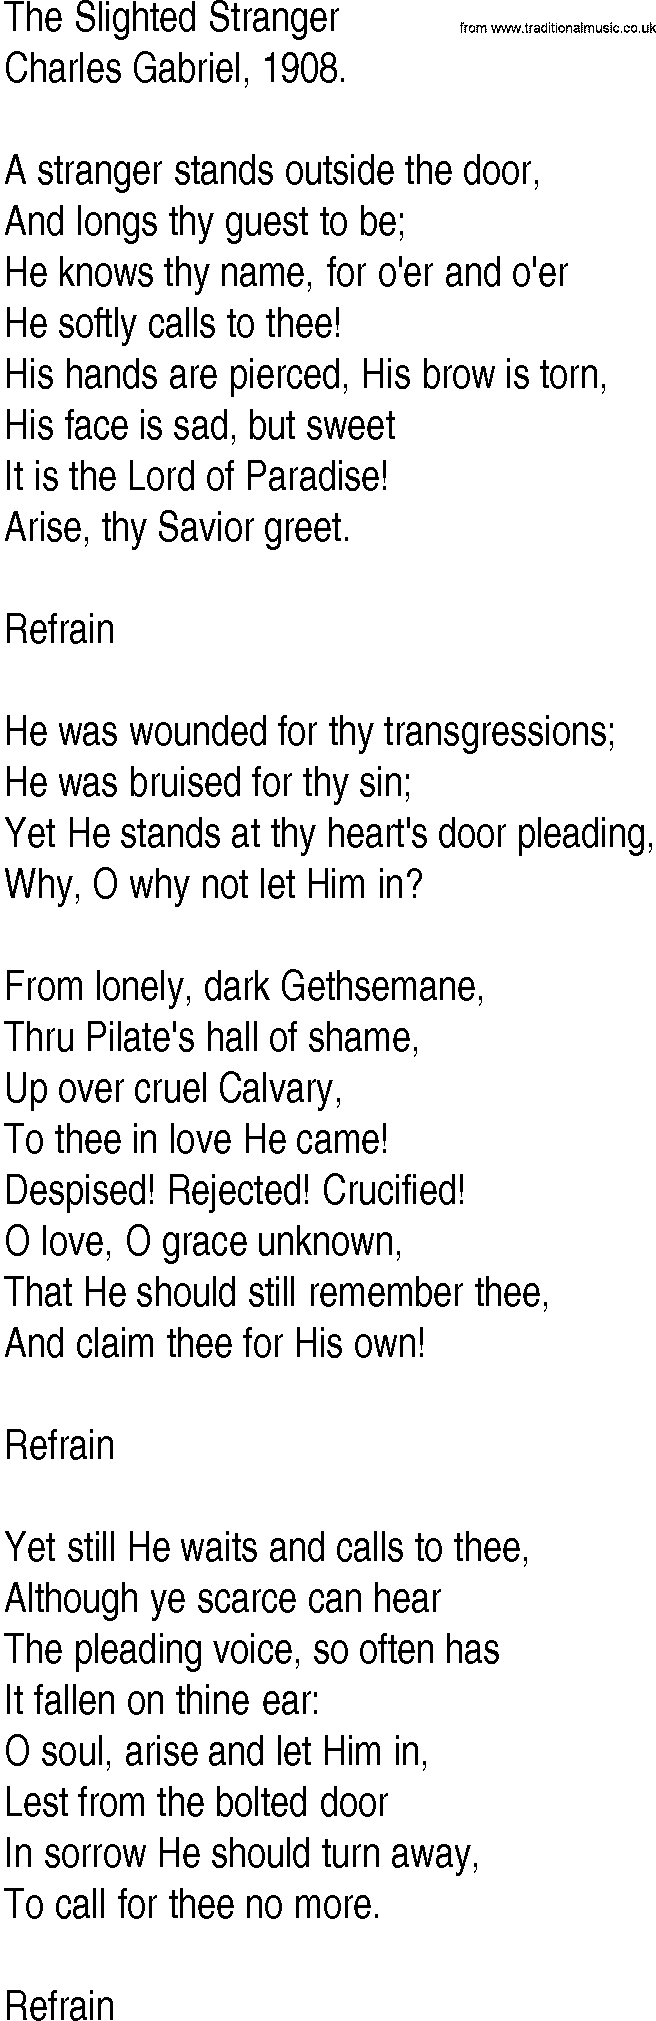 Hymn and Gospel Song: The Slighted Stranger by Charles Gabriel lyrics